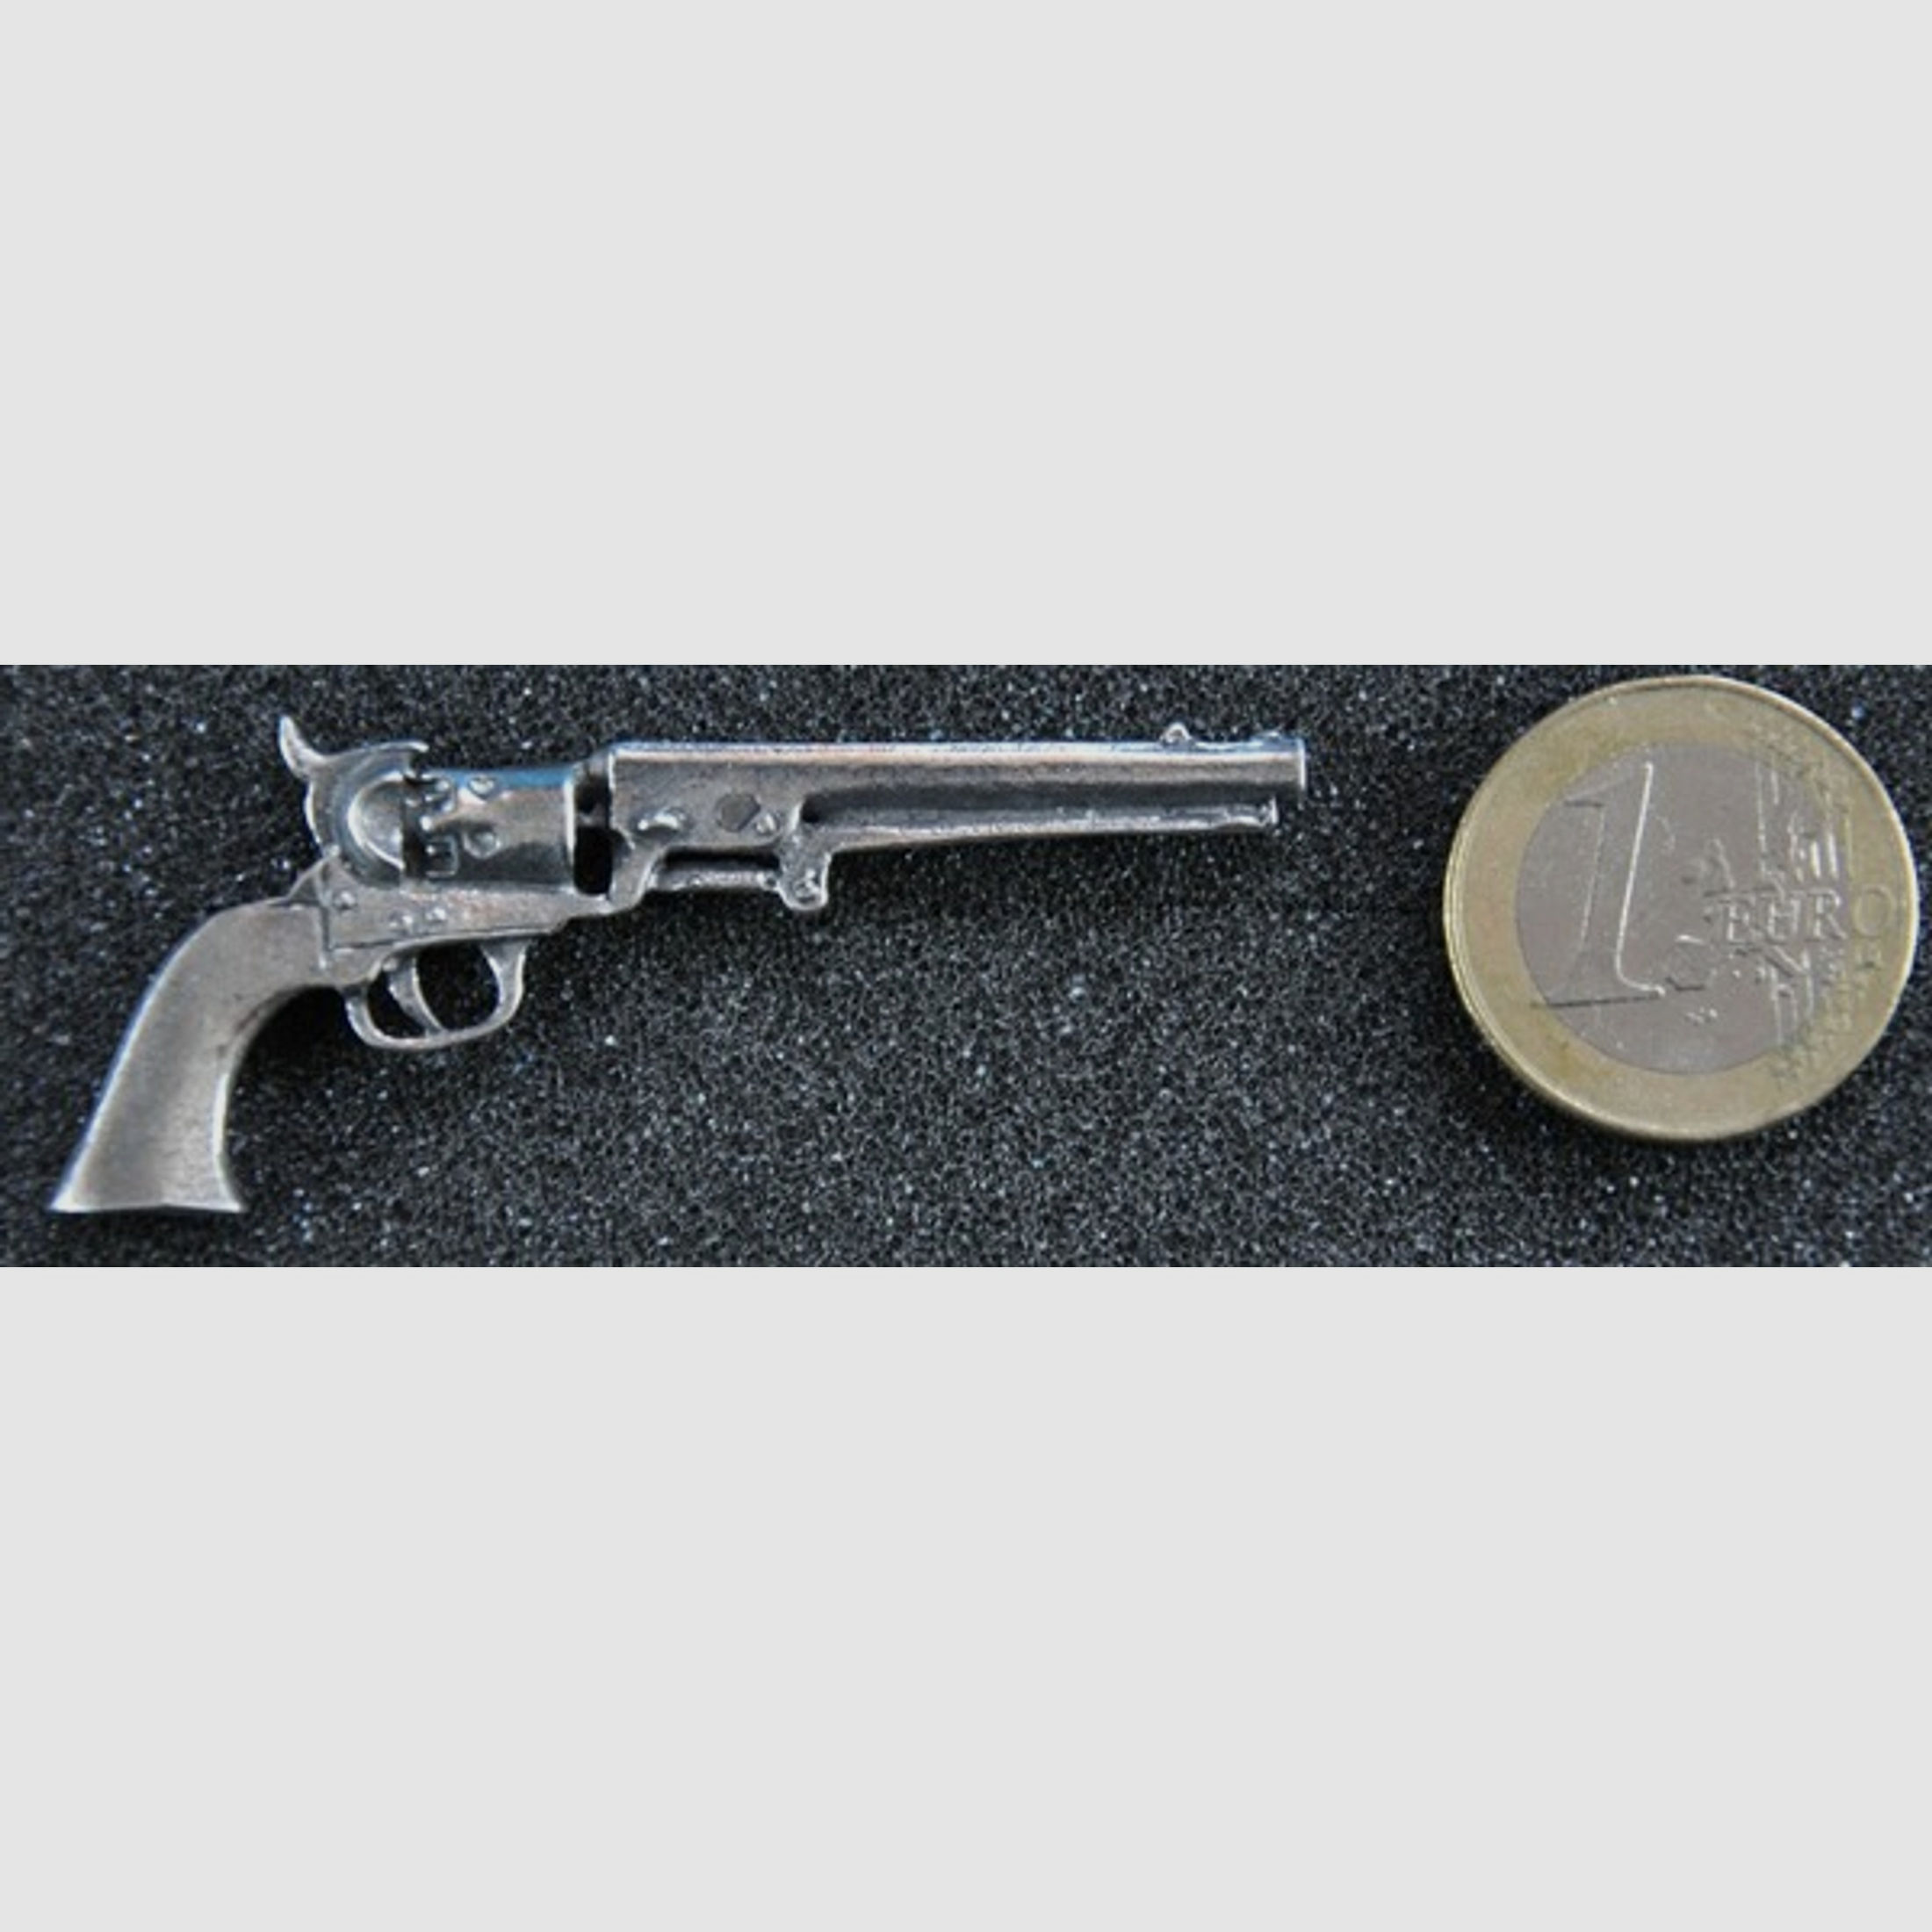 Vorderlader-Revolver Navy-Colt als Metall-Anstecker